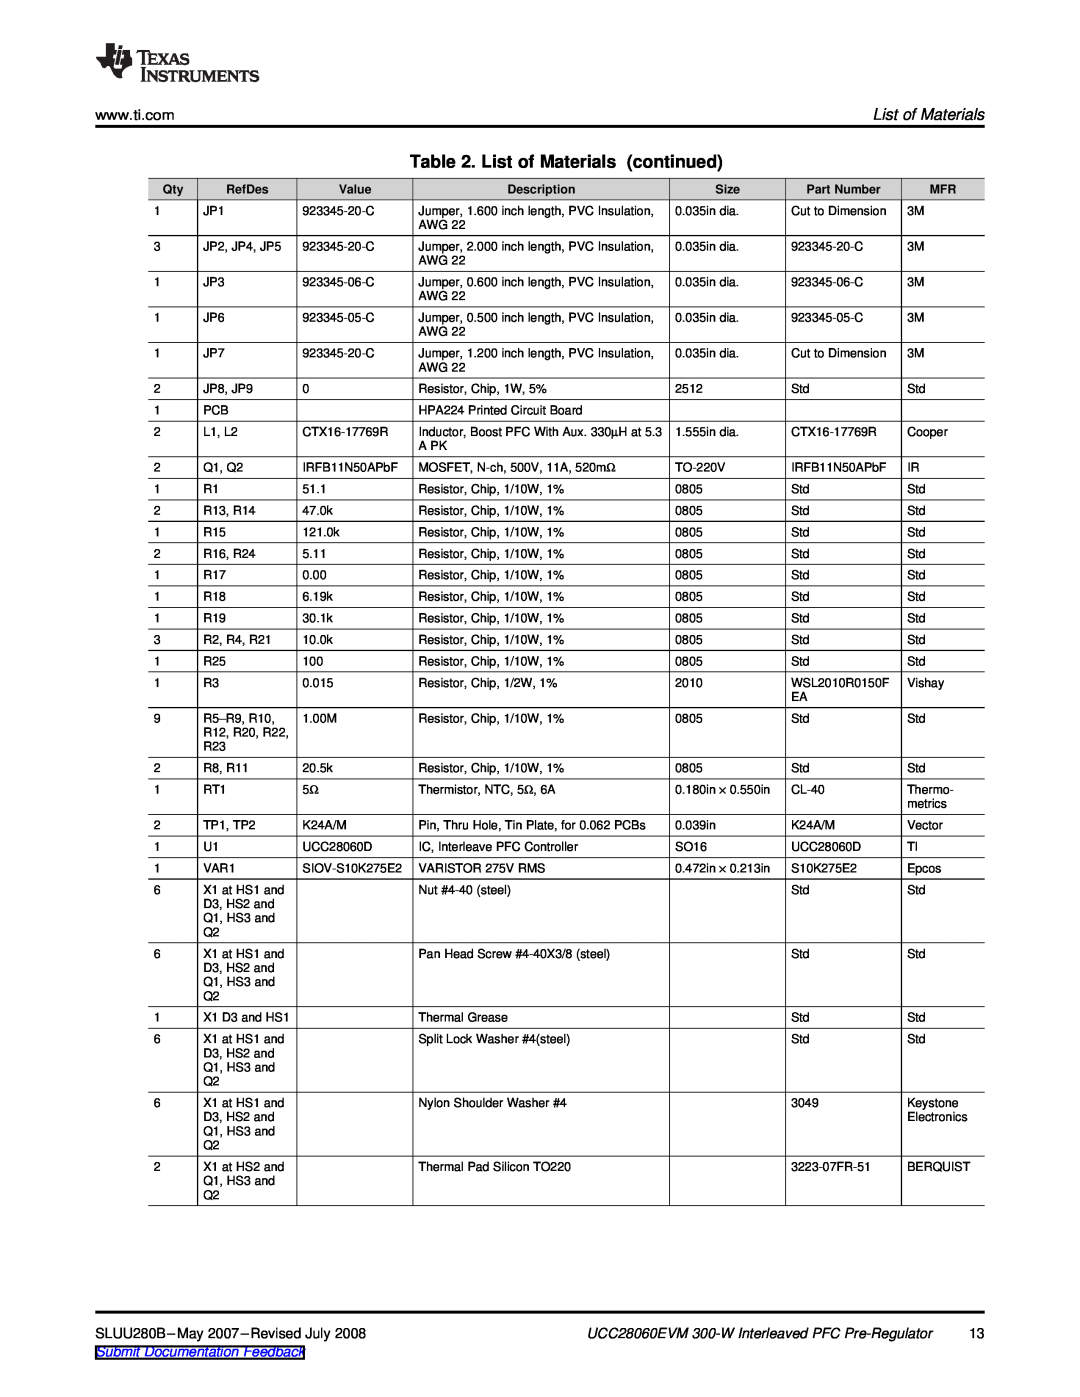 Texas Instruments List of Materials continued, UCC28060EVM 300-W Interleaved PFC Pre-Regulator, RefDes, Value, Size 